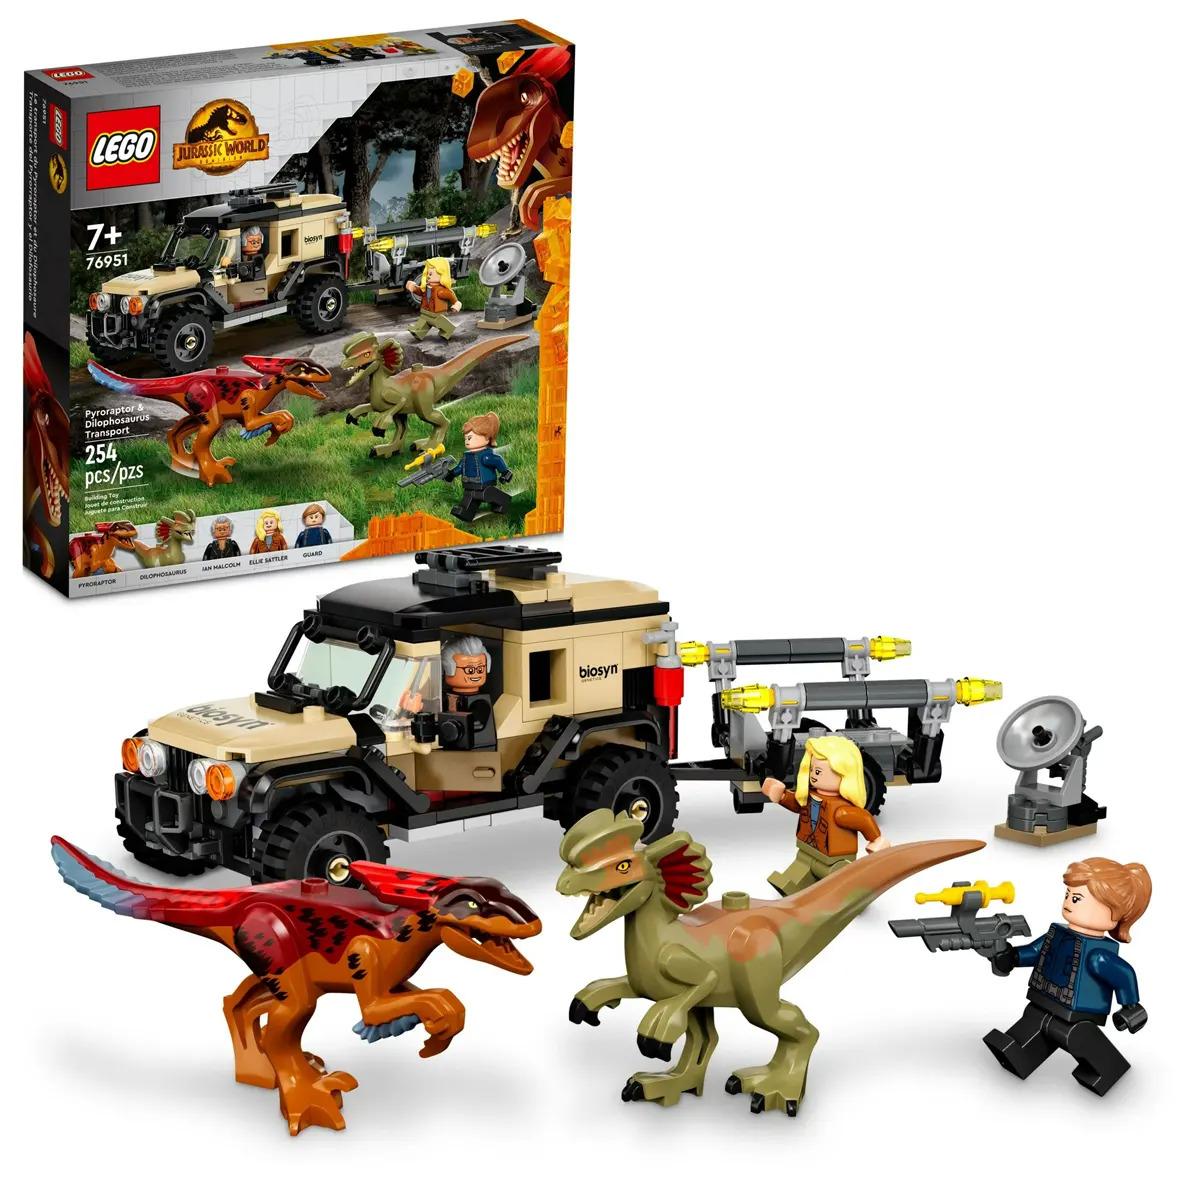 LEGO Jurassic World Dominion Pyroraptor and Dilophosaurus Transport Set for $29.97